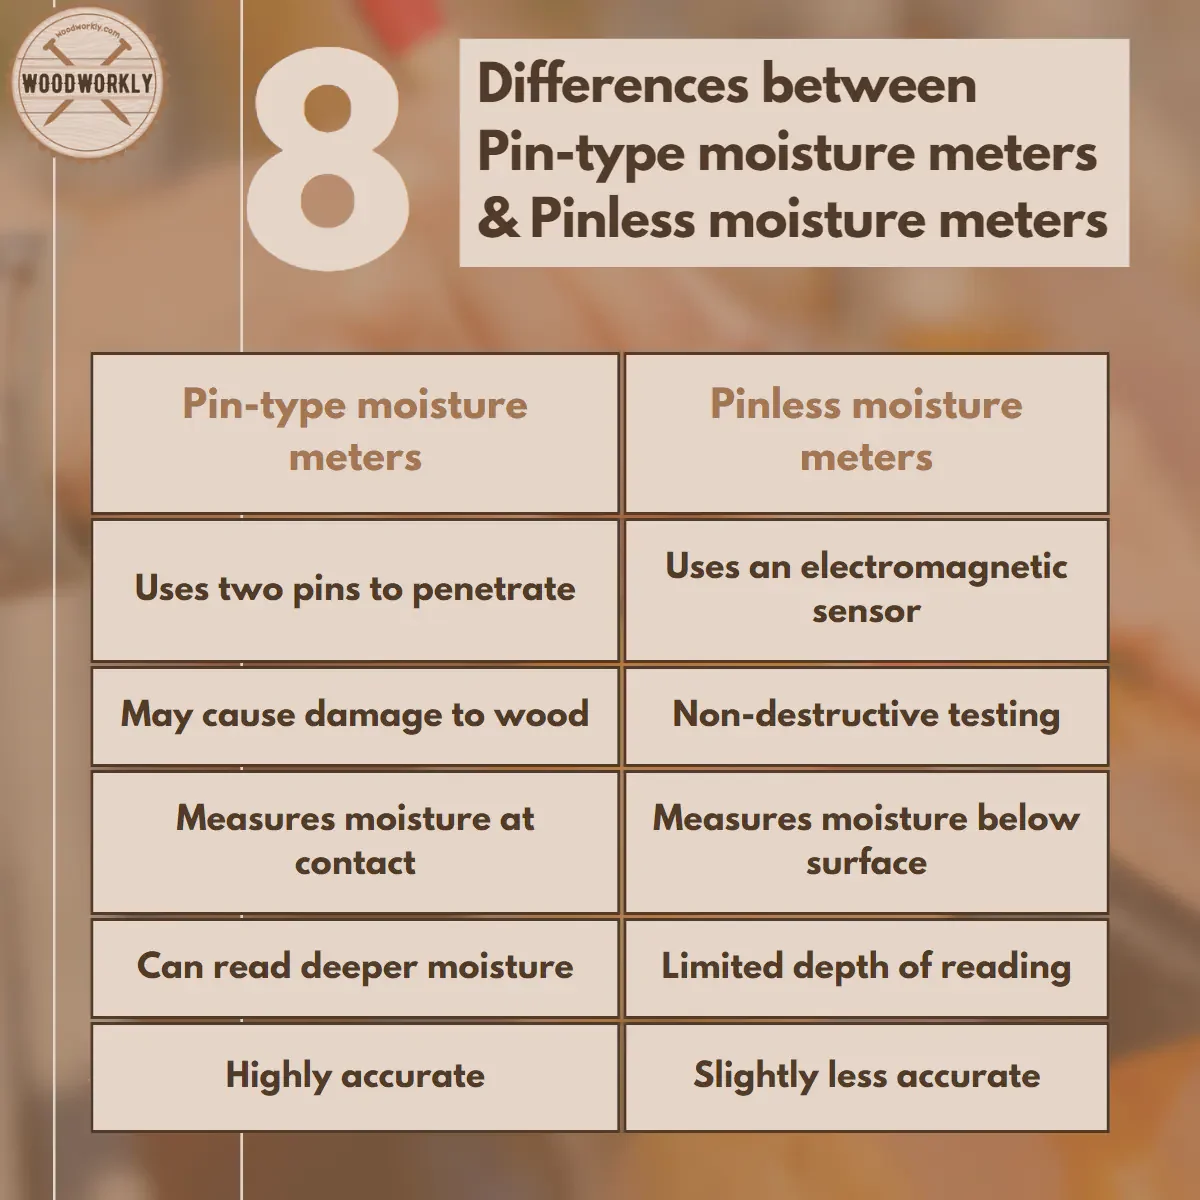 Differences between Pin-type moisture meters & Pinless moisture meters